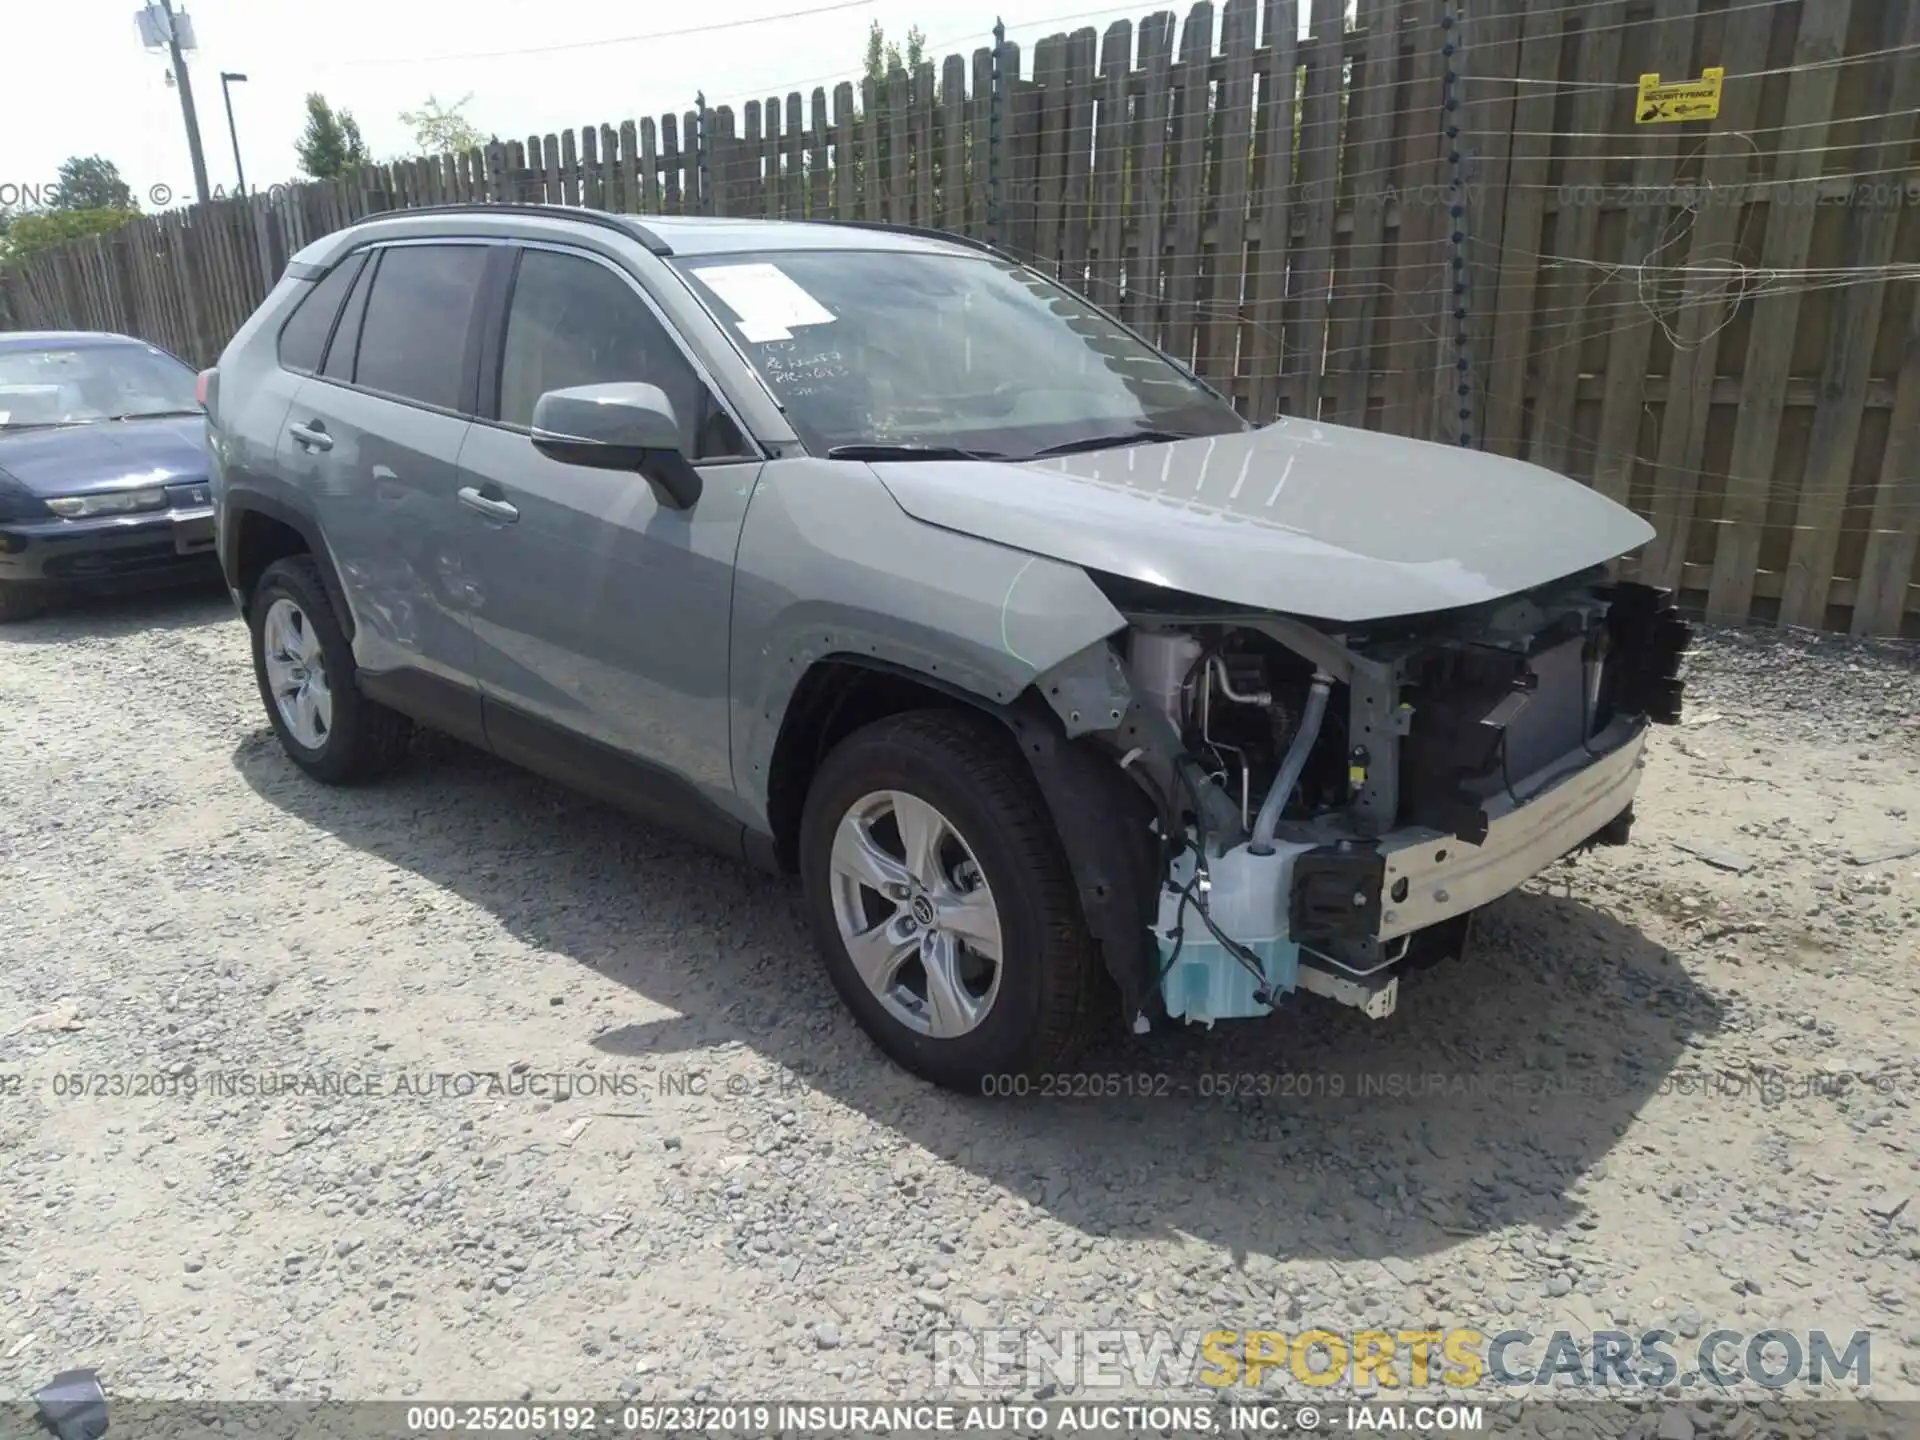 1 Photograph of a damaged car JTMP1RFV6KD020347 TOYOTA RAV4 2019